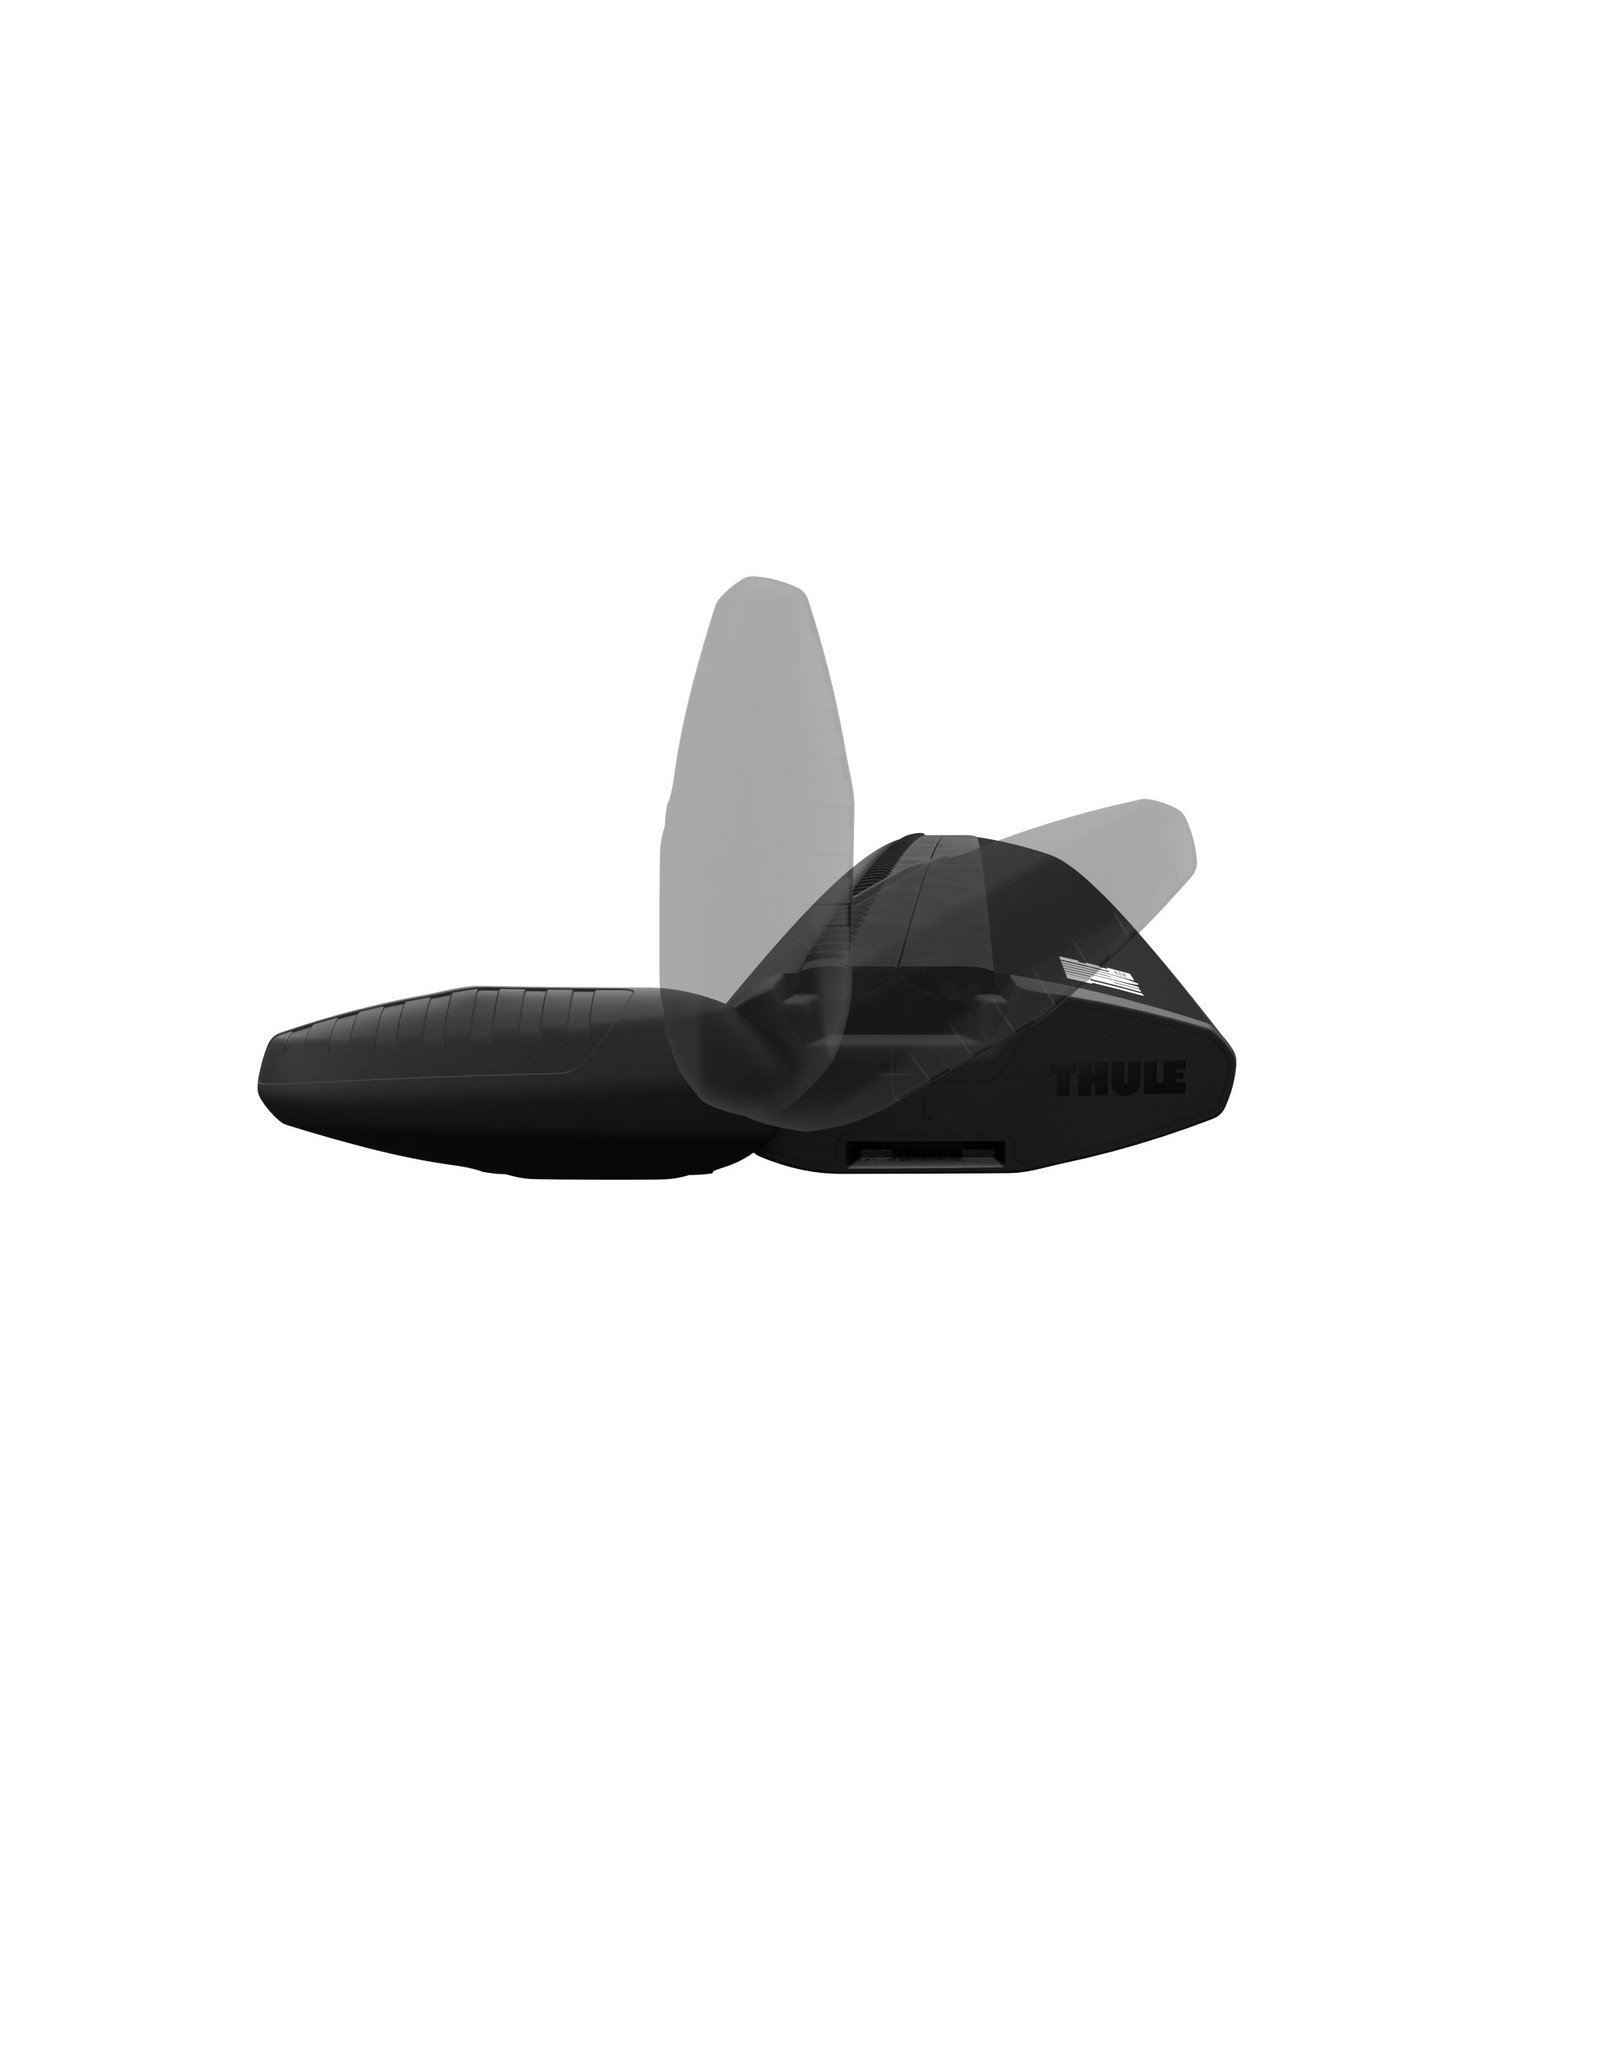 THULE Wingbar Evo 150 (60") Black